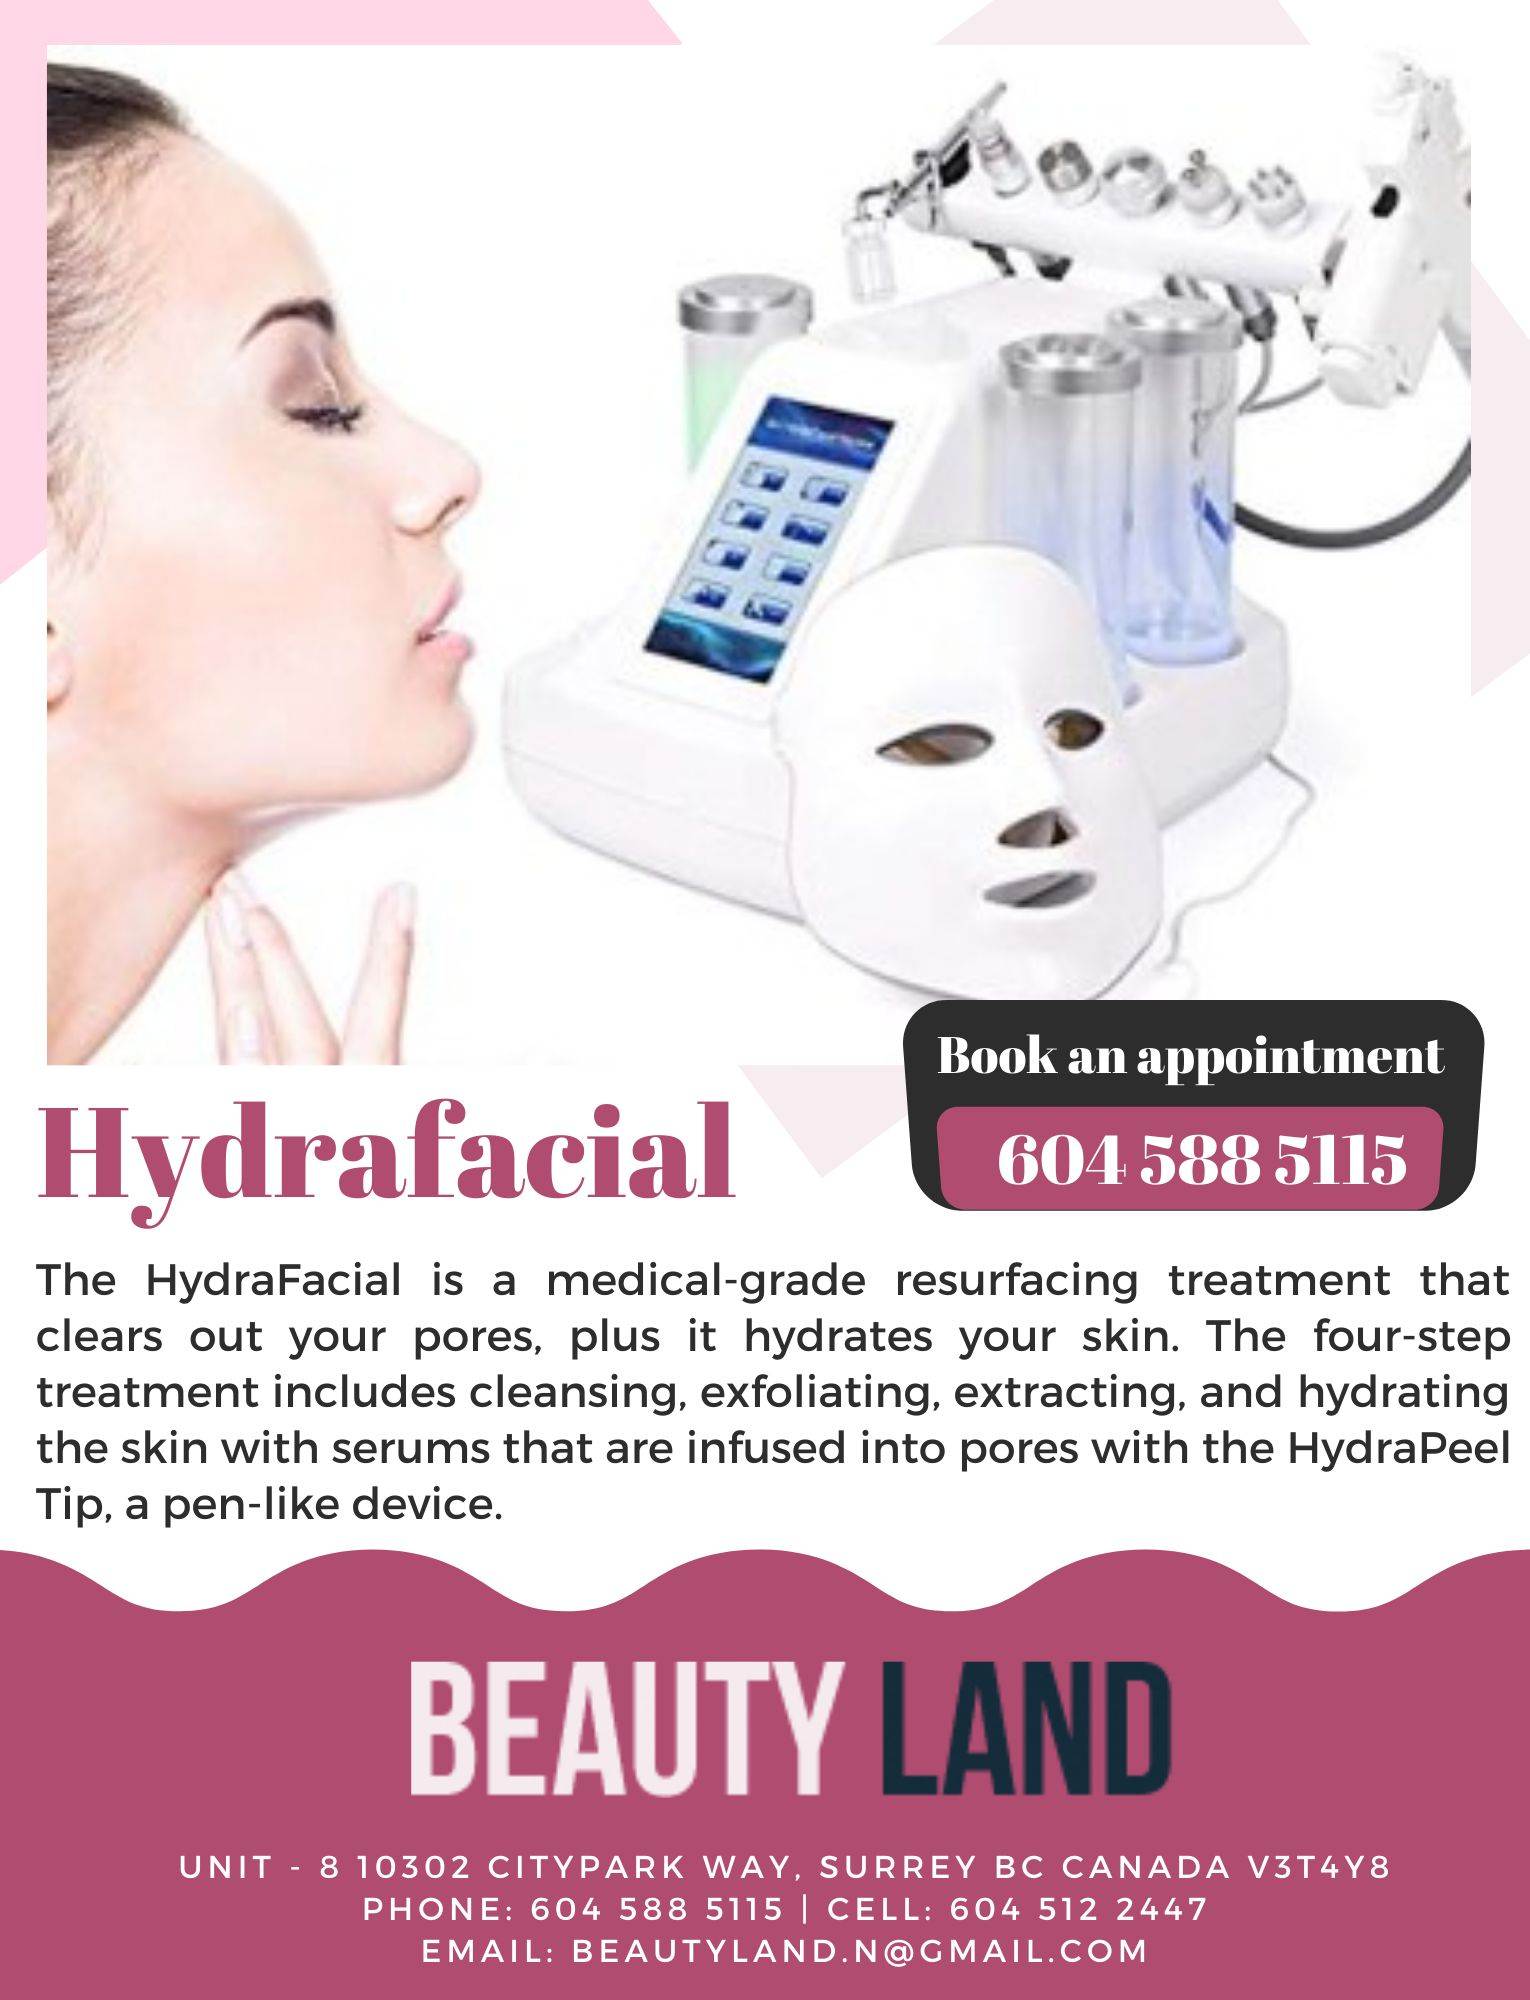 Hydra Facial Services at Beauty Land Salon in Surrey, BC